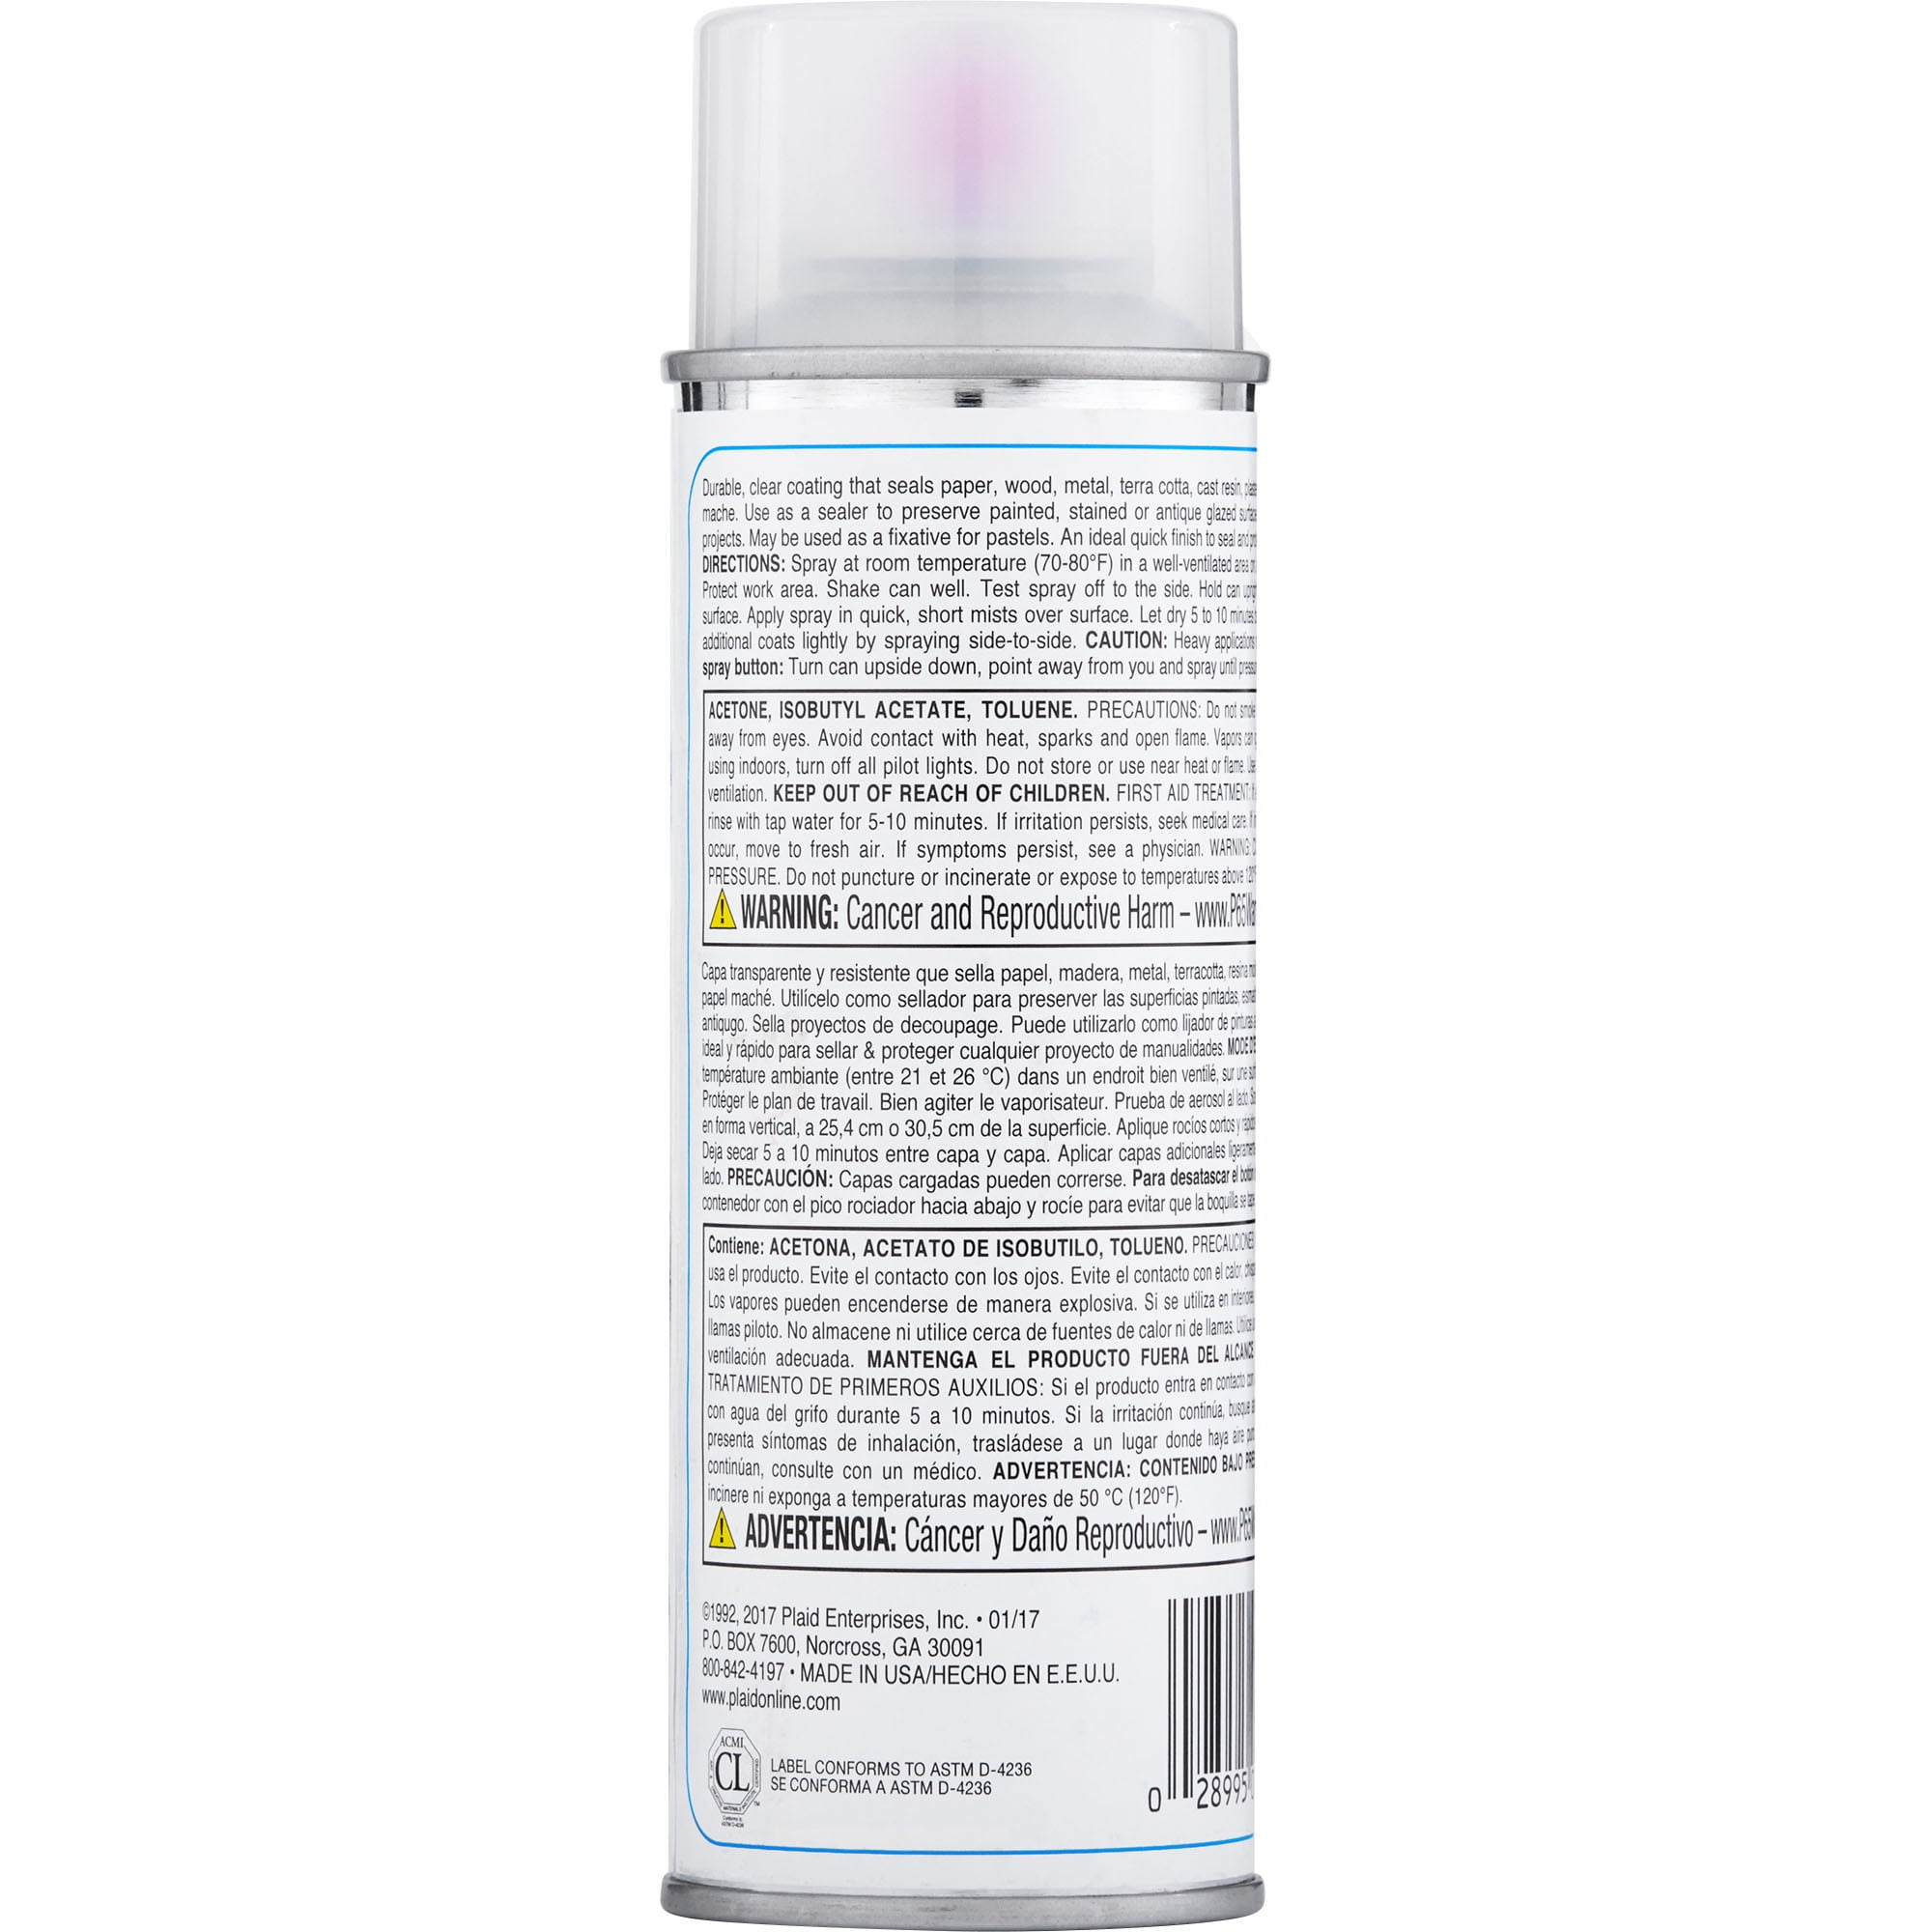 Plaid Clear Acrylic Sealer Aerosol Spray, 6 Ounce (Pack of 1), Matte